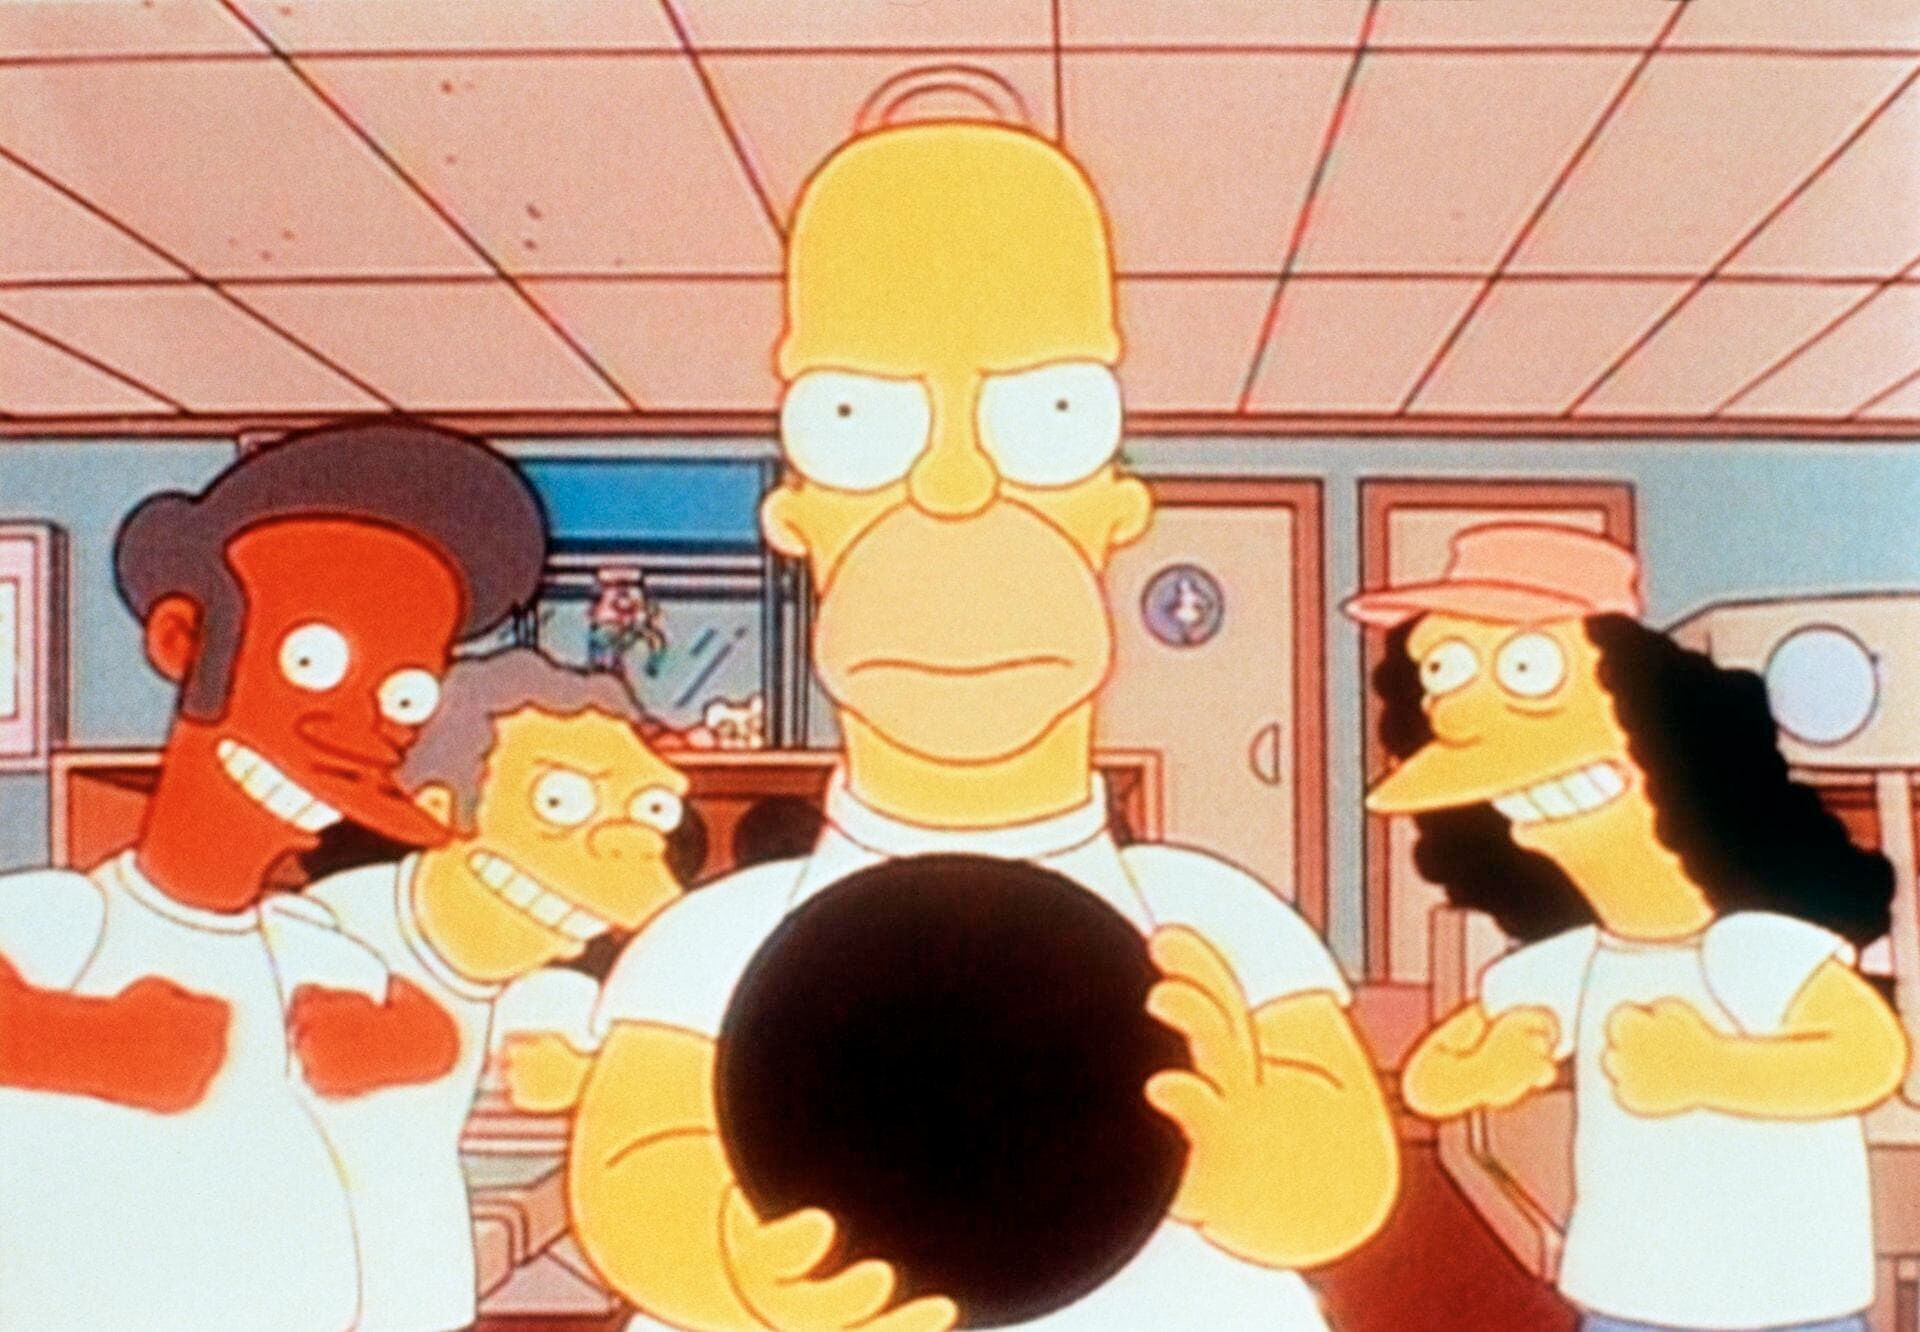 The Simpsons - Sideshow Bob's Last Gleaming